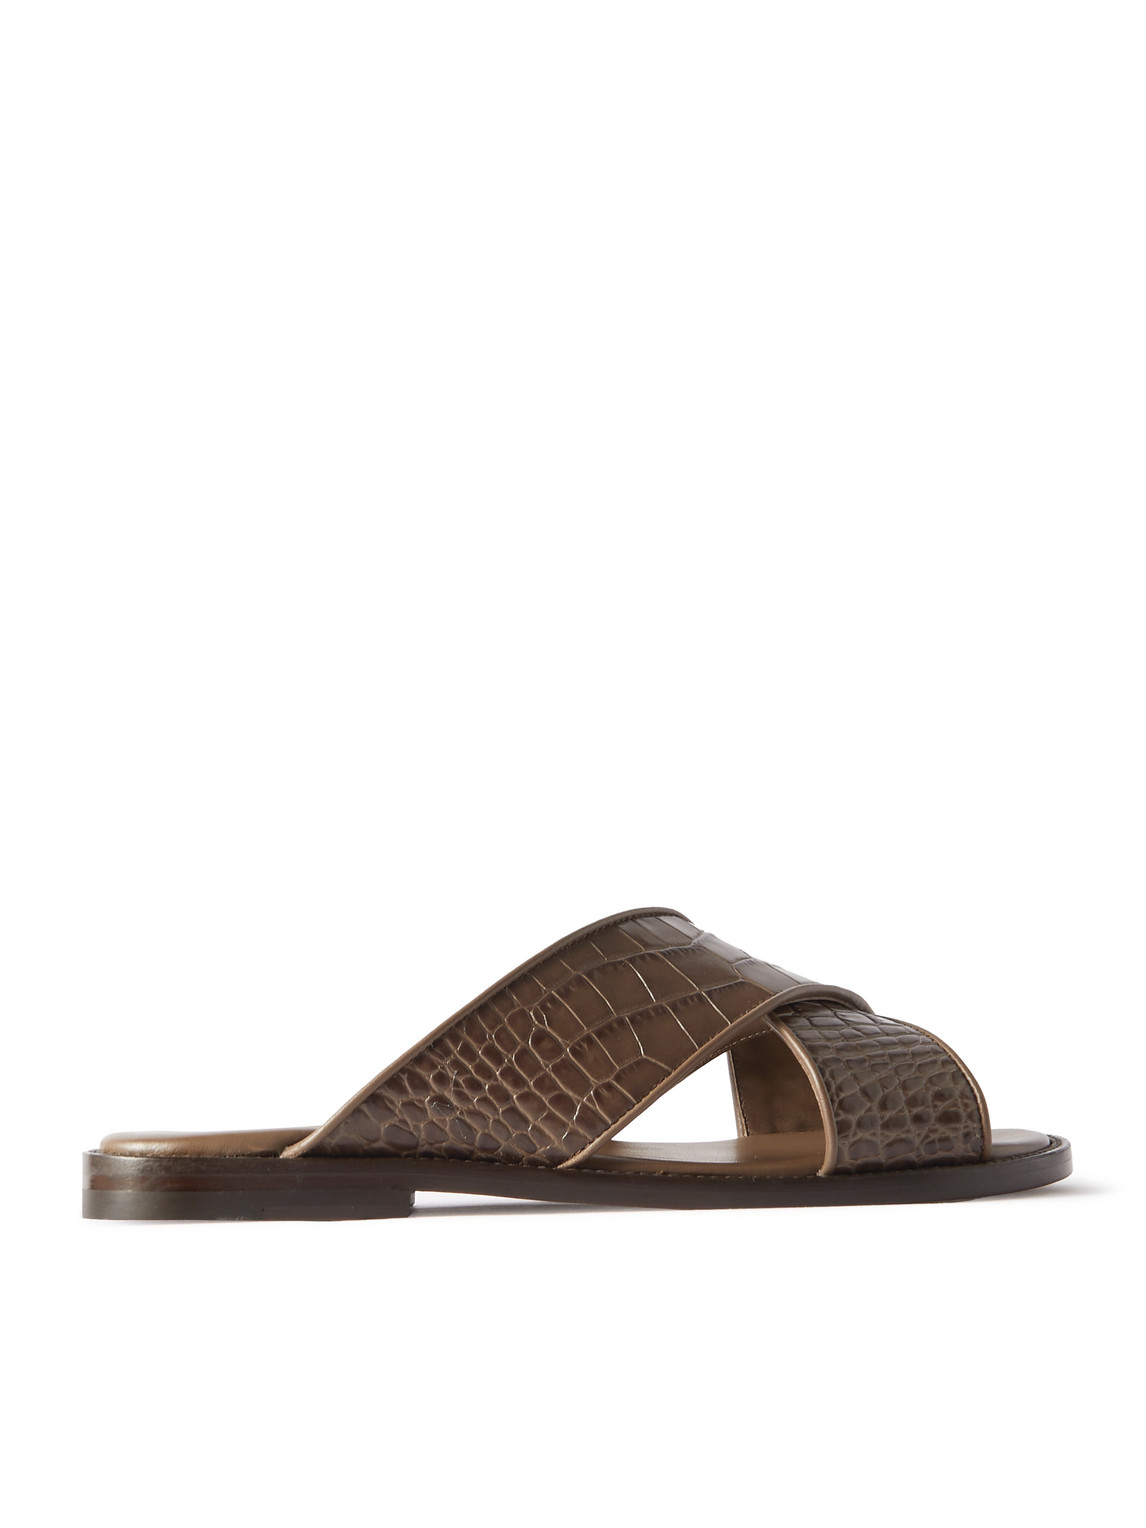 Otawi Croc-Effect Leather Sandals